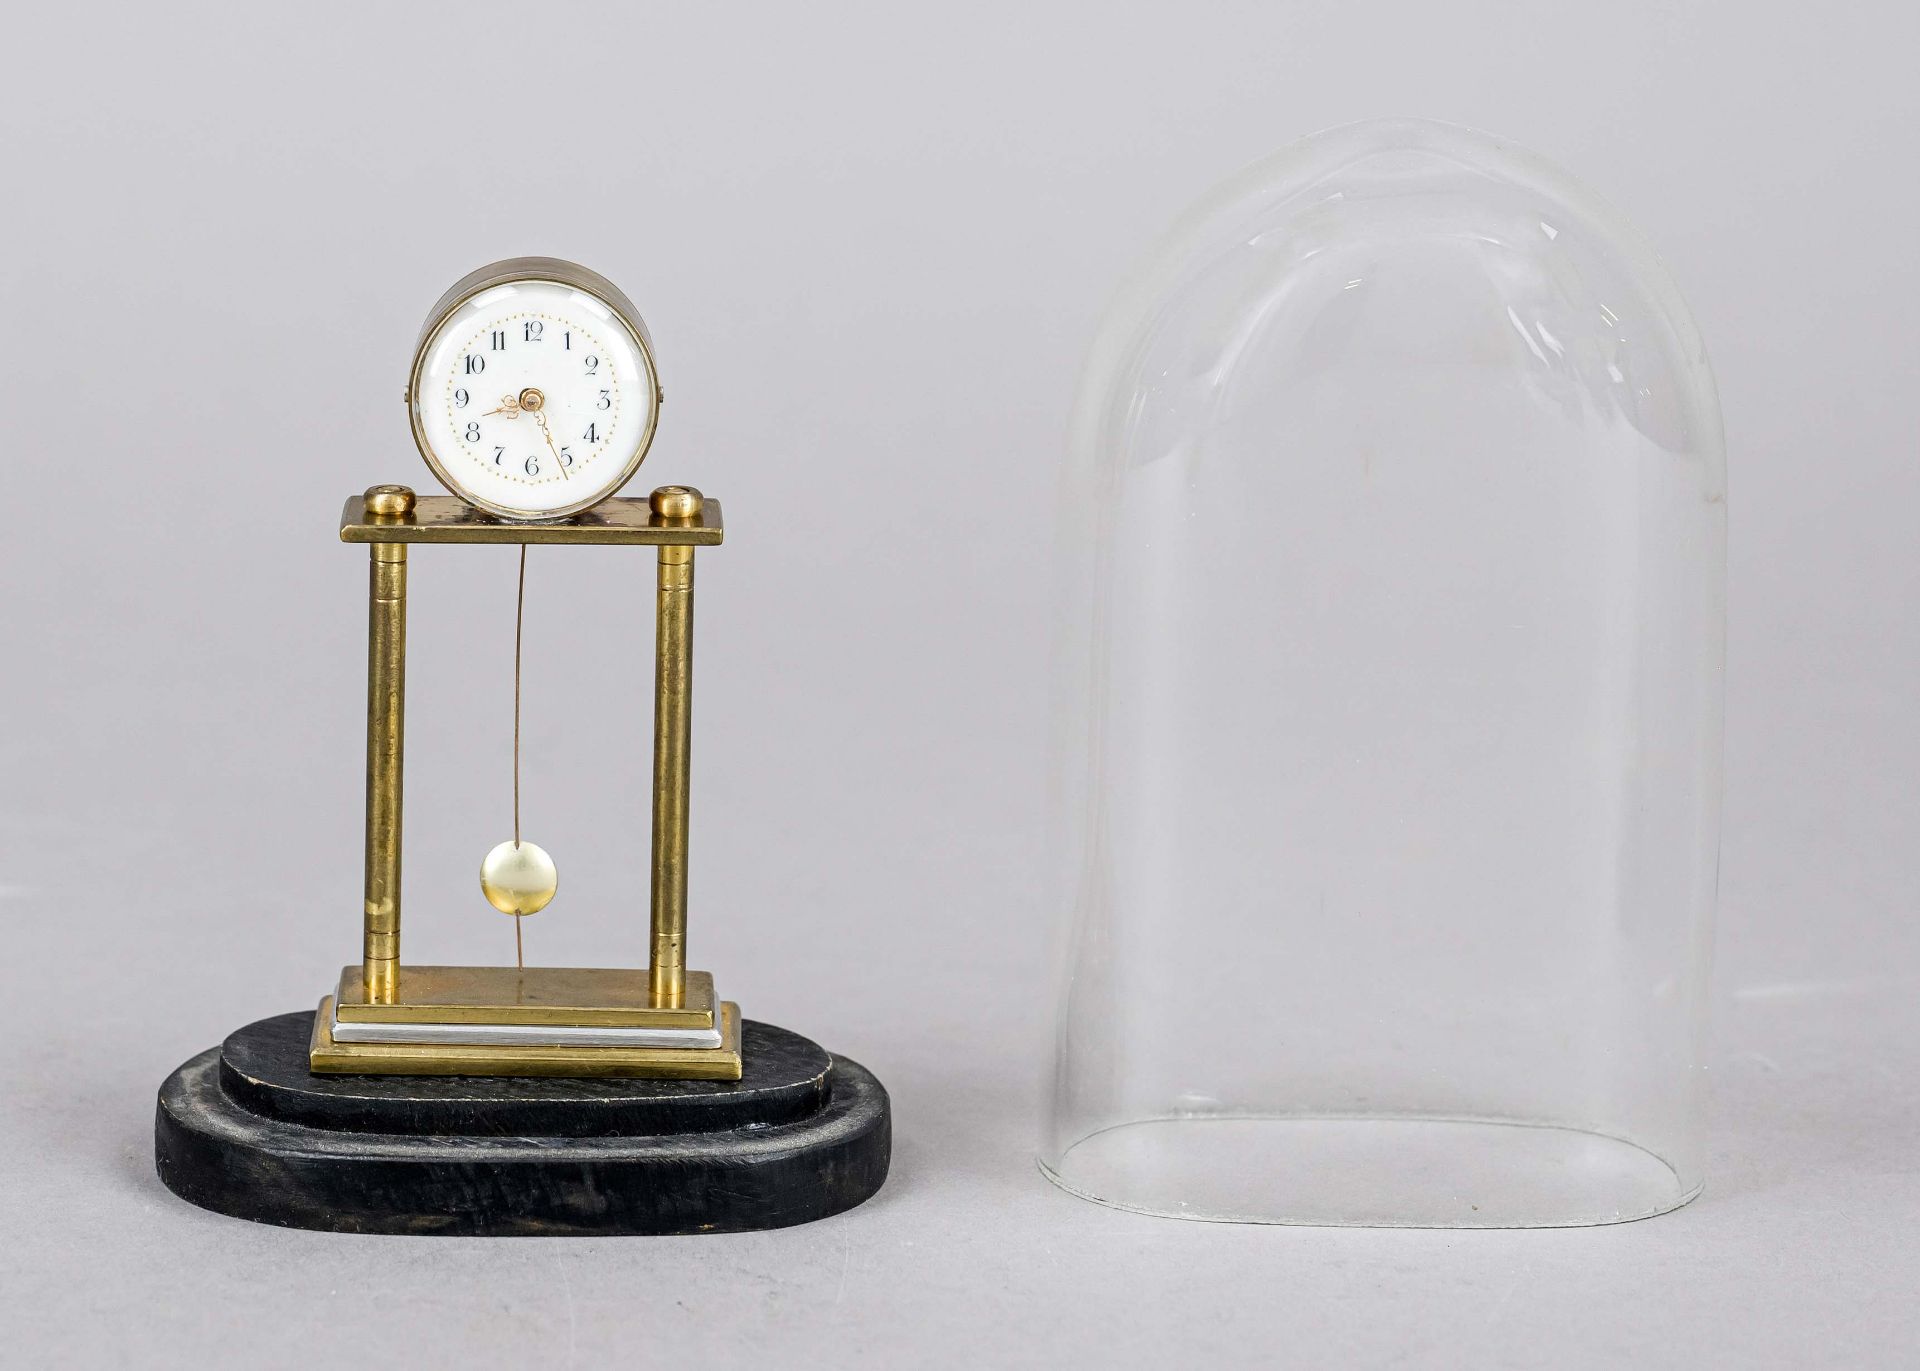 Miniature portal clock, brass, under oval glass dome on ebonized base, 20th century, white enamel - Image 2 of 2